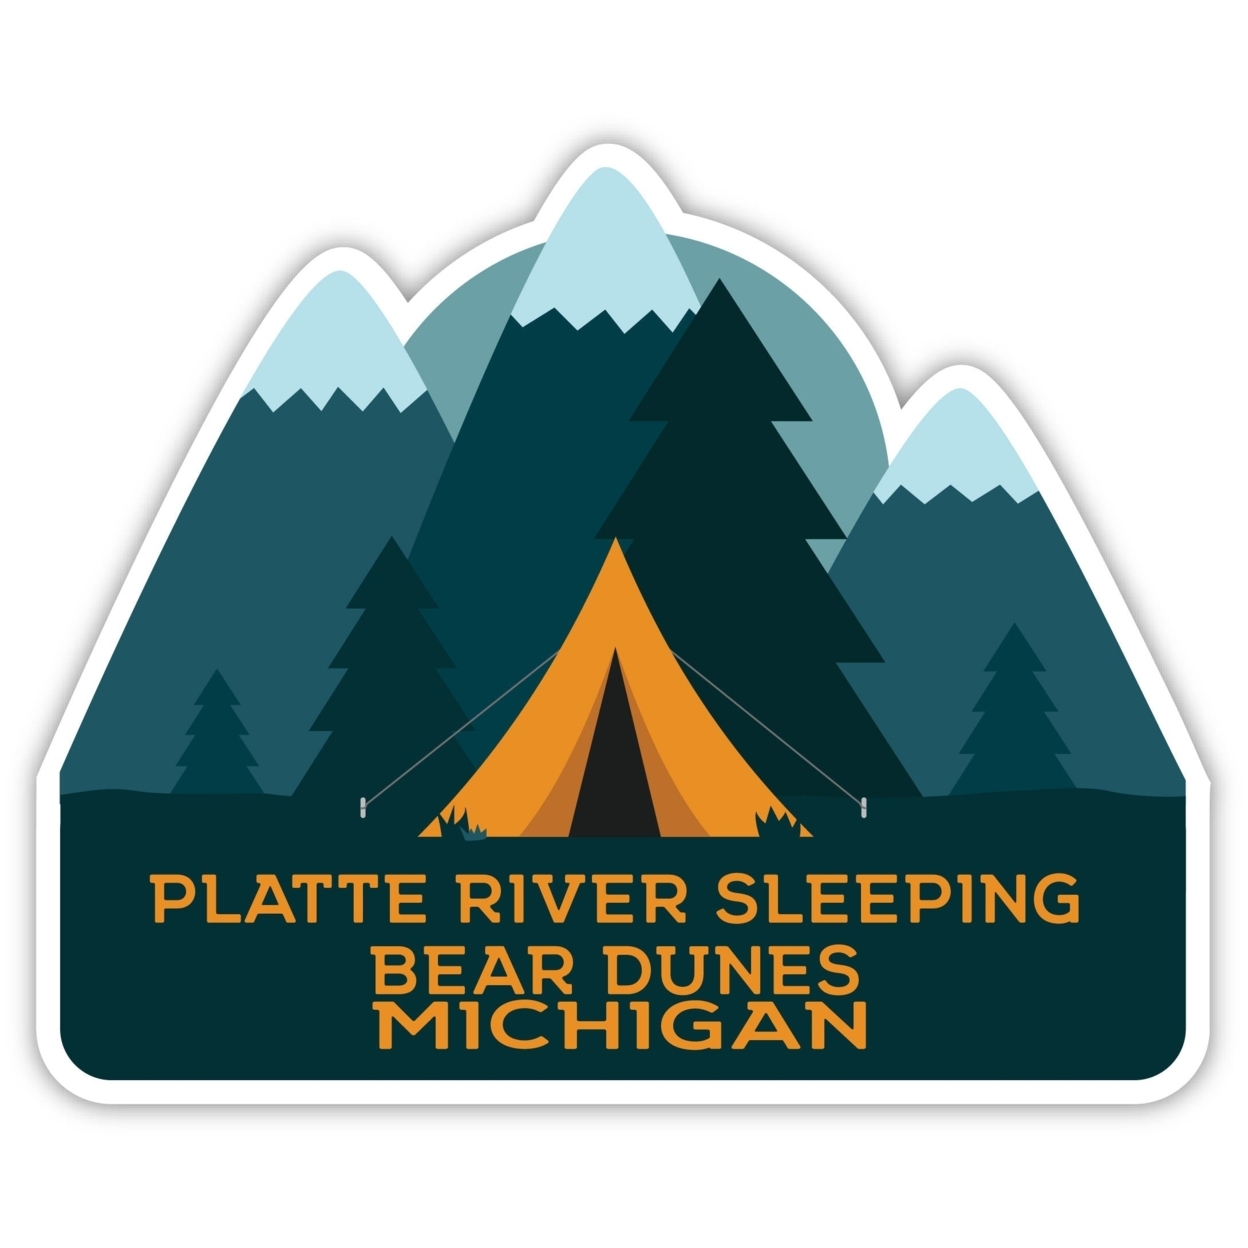 Platte River Sleeping Bear Dunes Michigan Souvenir Decorative Stickers (Choose Theme And Size) - Single Unit, 2-Inch, Tent